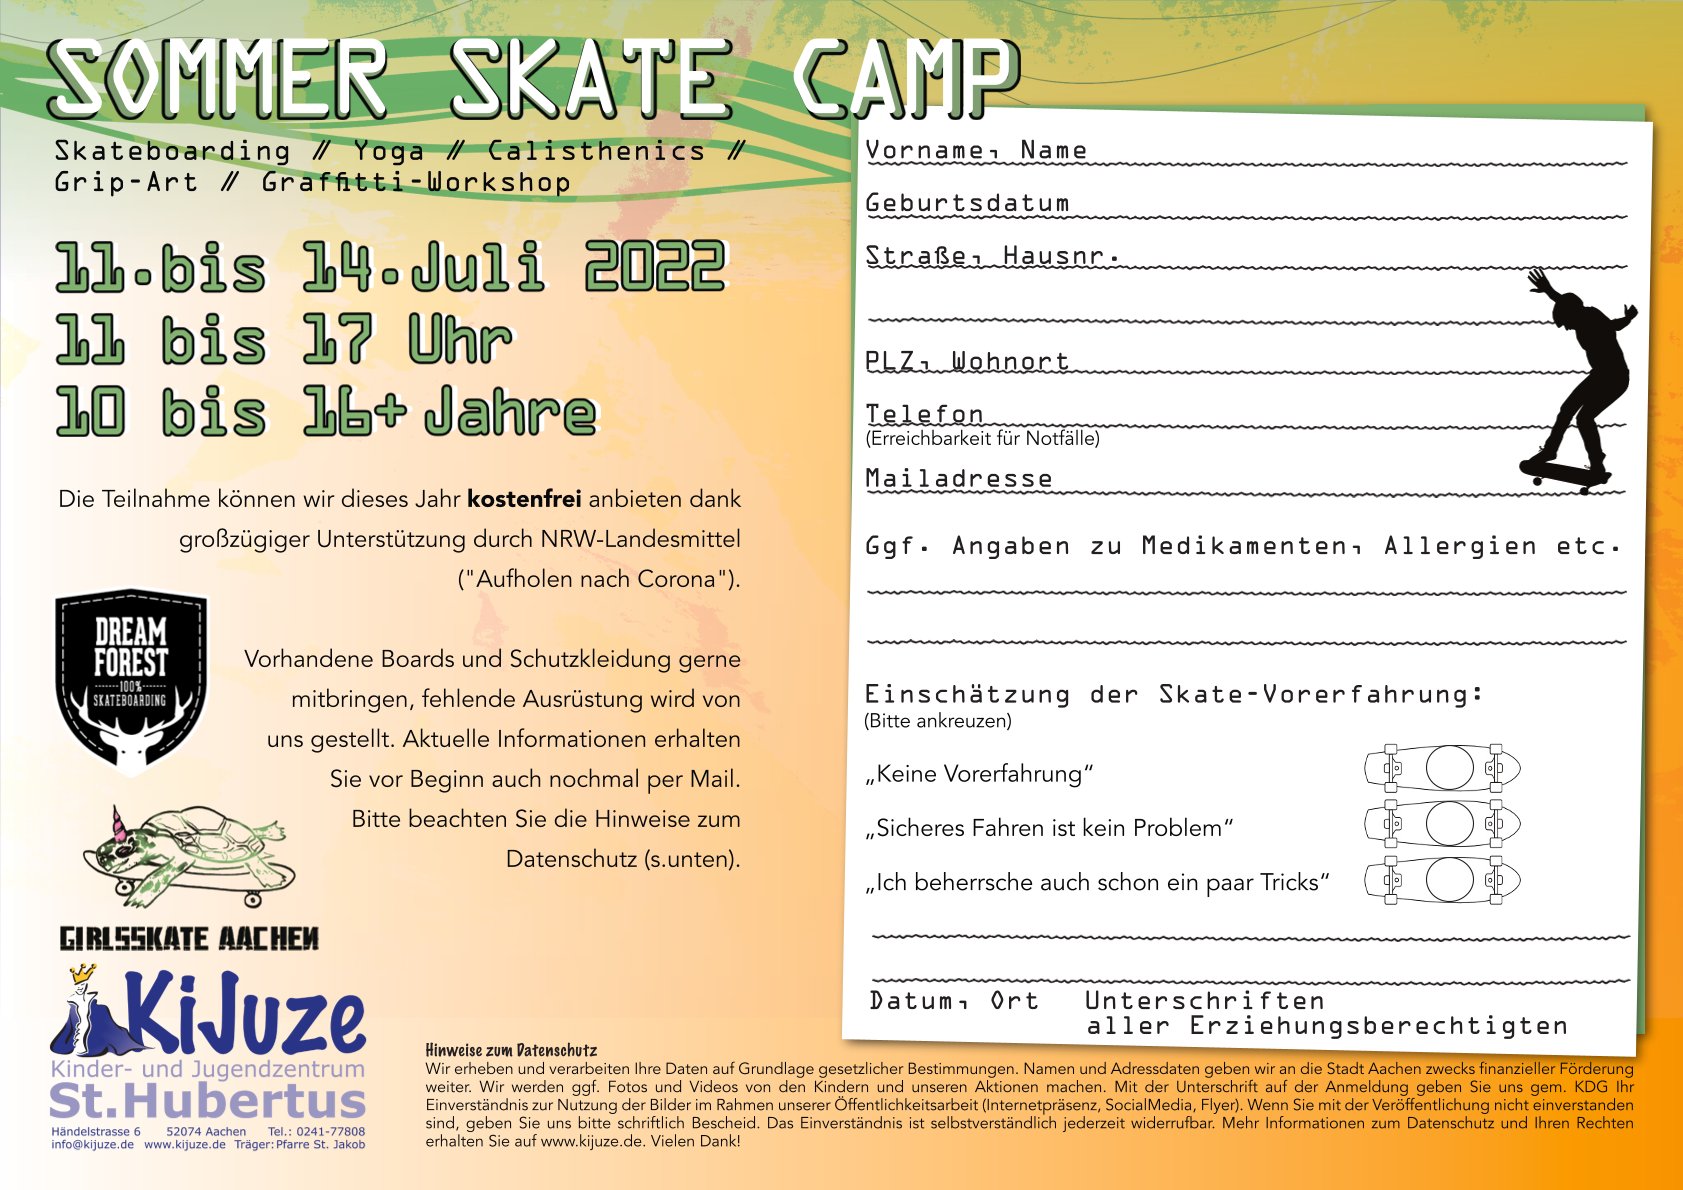 SkateCamp_2022_Anmeldung (c) kijuze